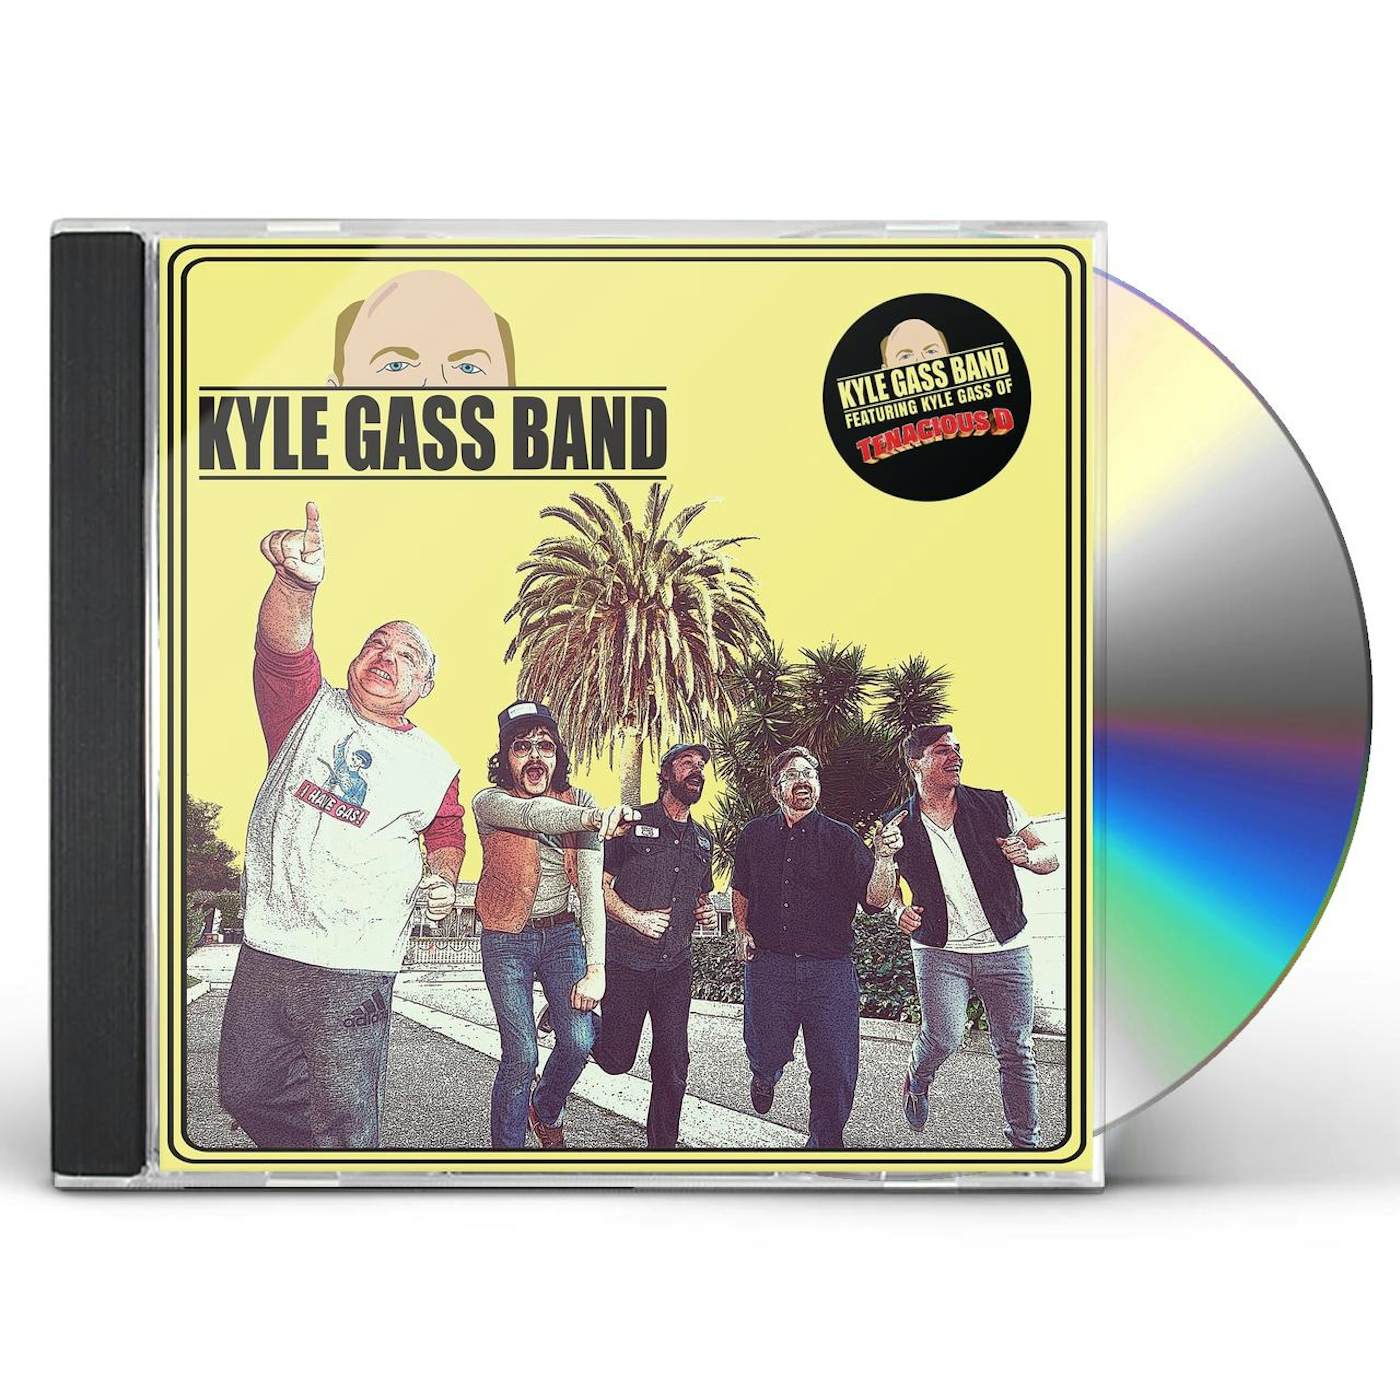 KYLE GASS BAND CD